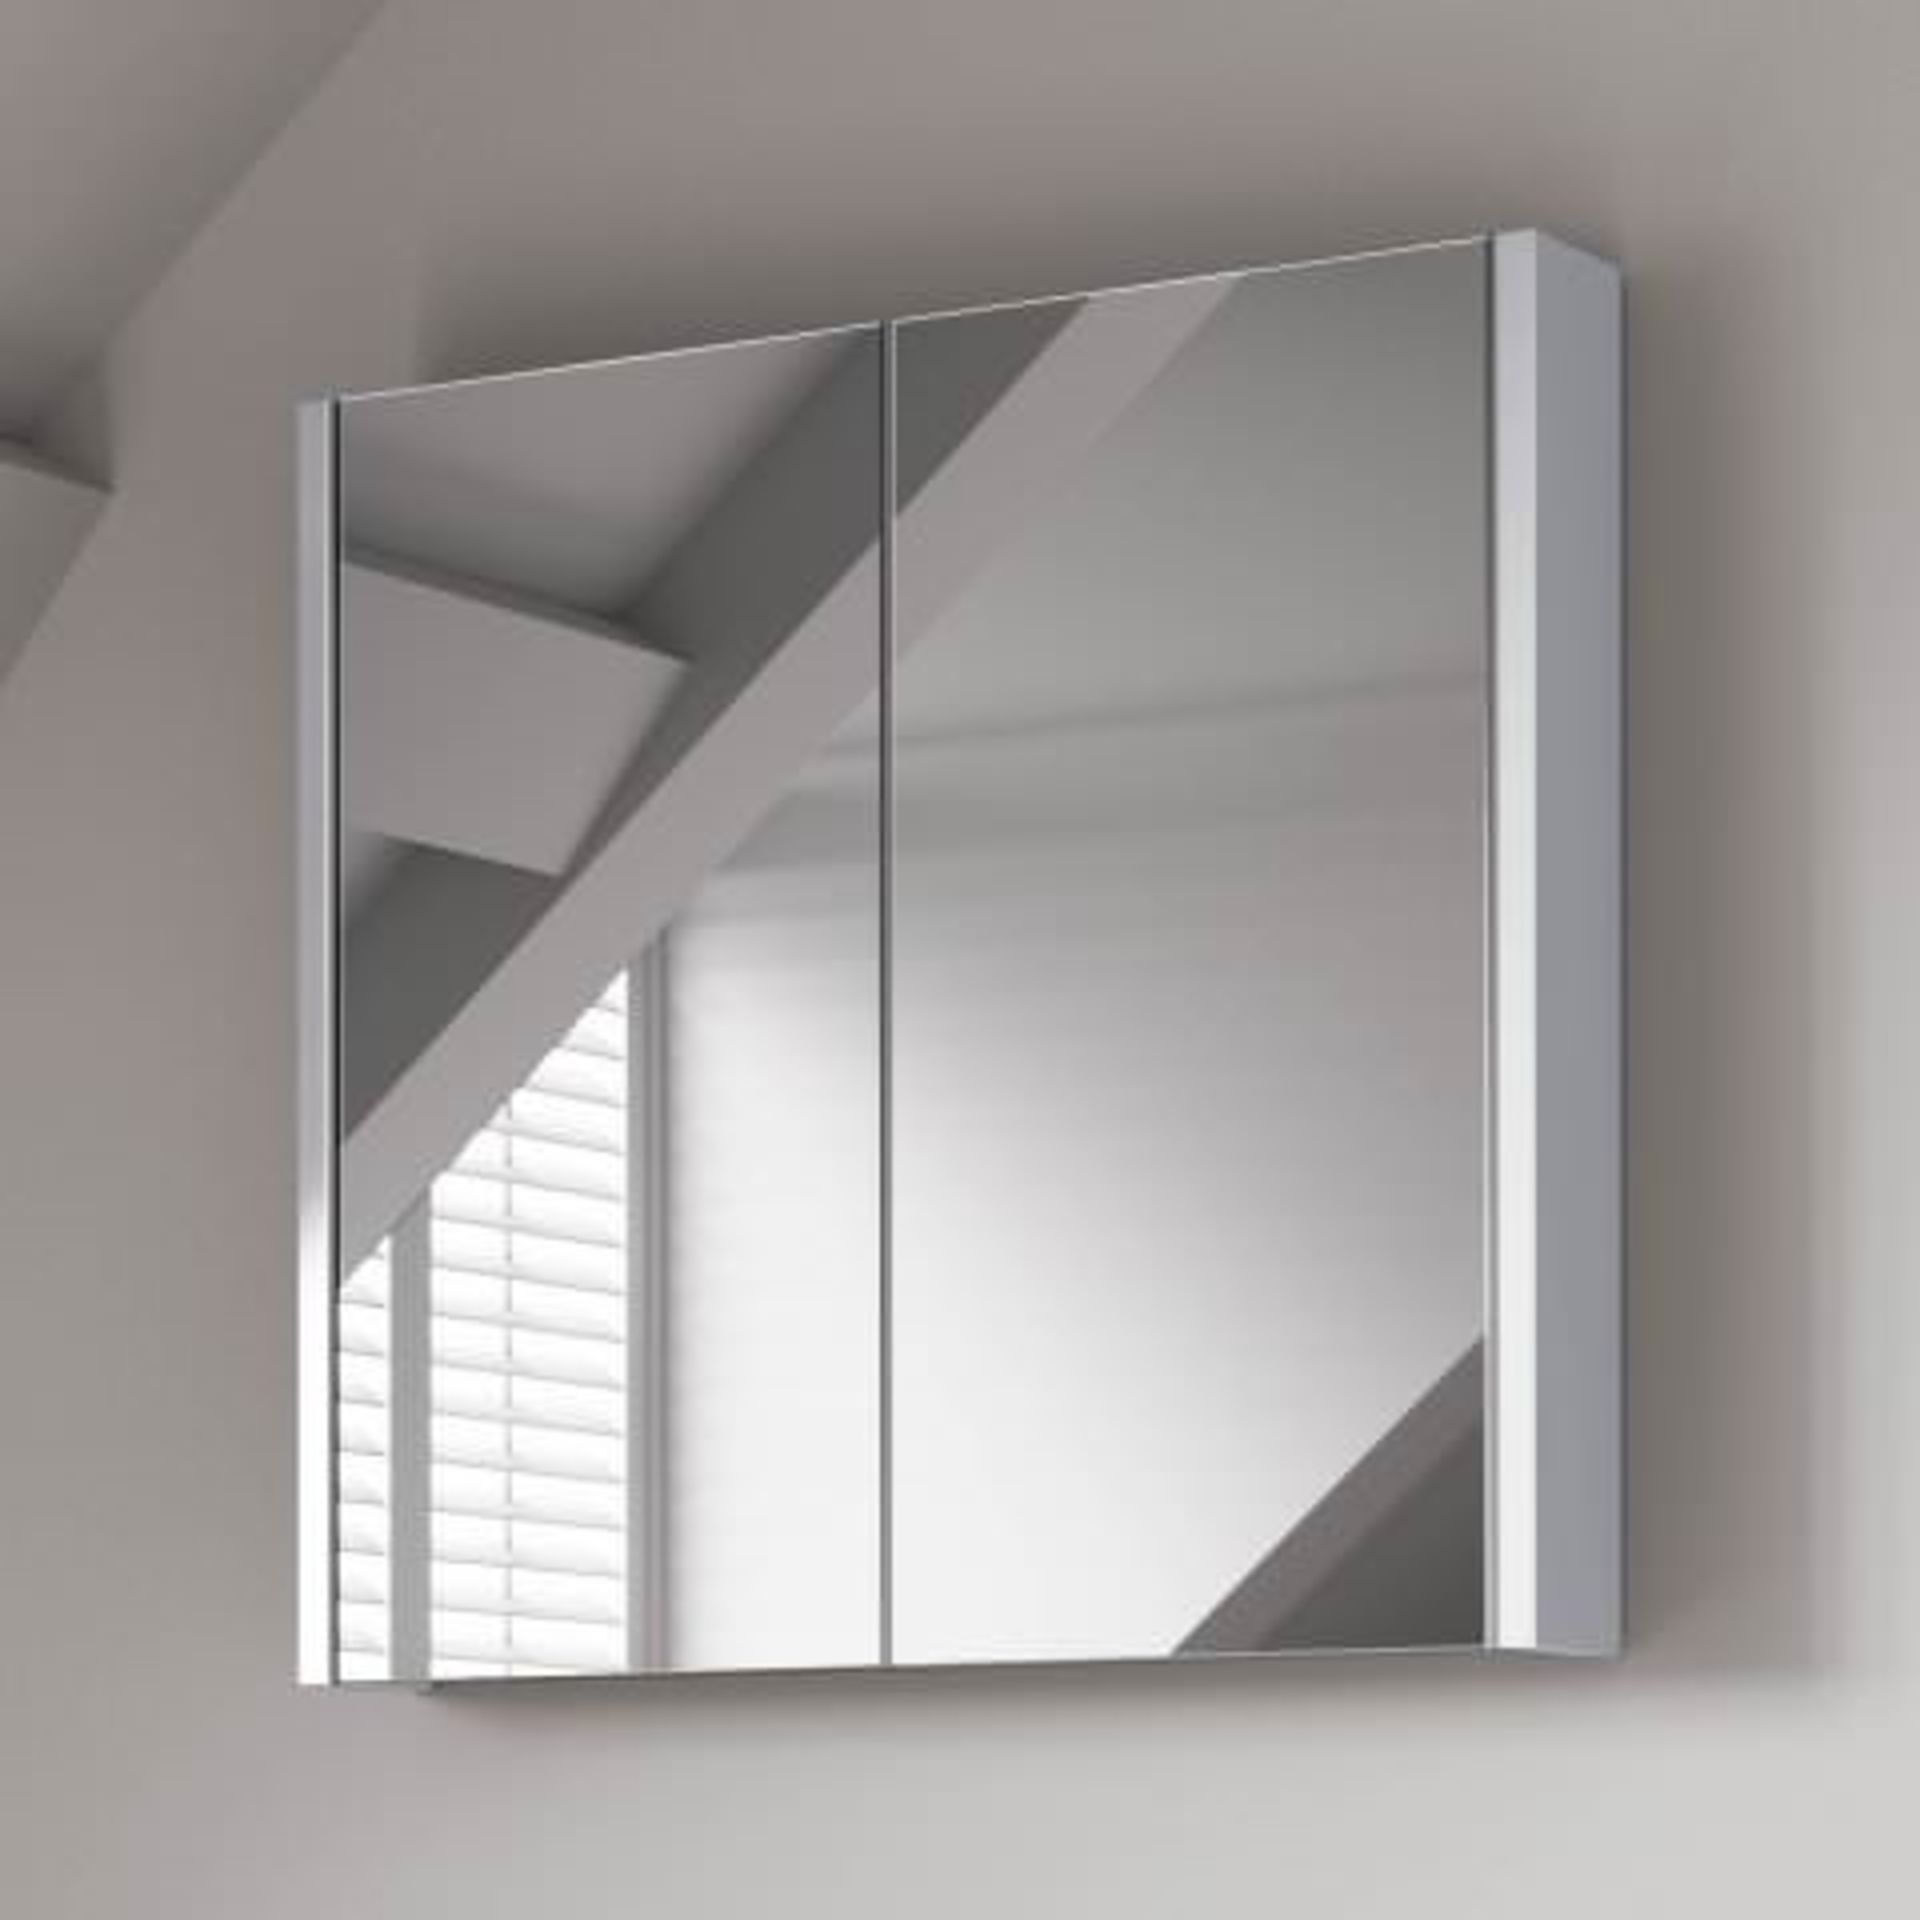 (W313) 600mm Gloss White Double Door Mirror Cabinet RRP £299.99. Our 600mm Gloss White Double Door - Image 3 of 3